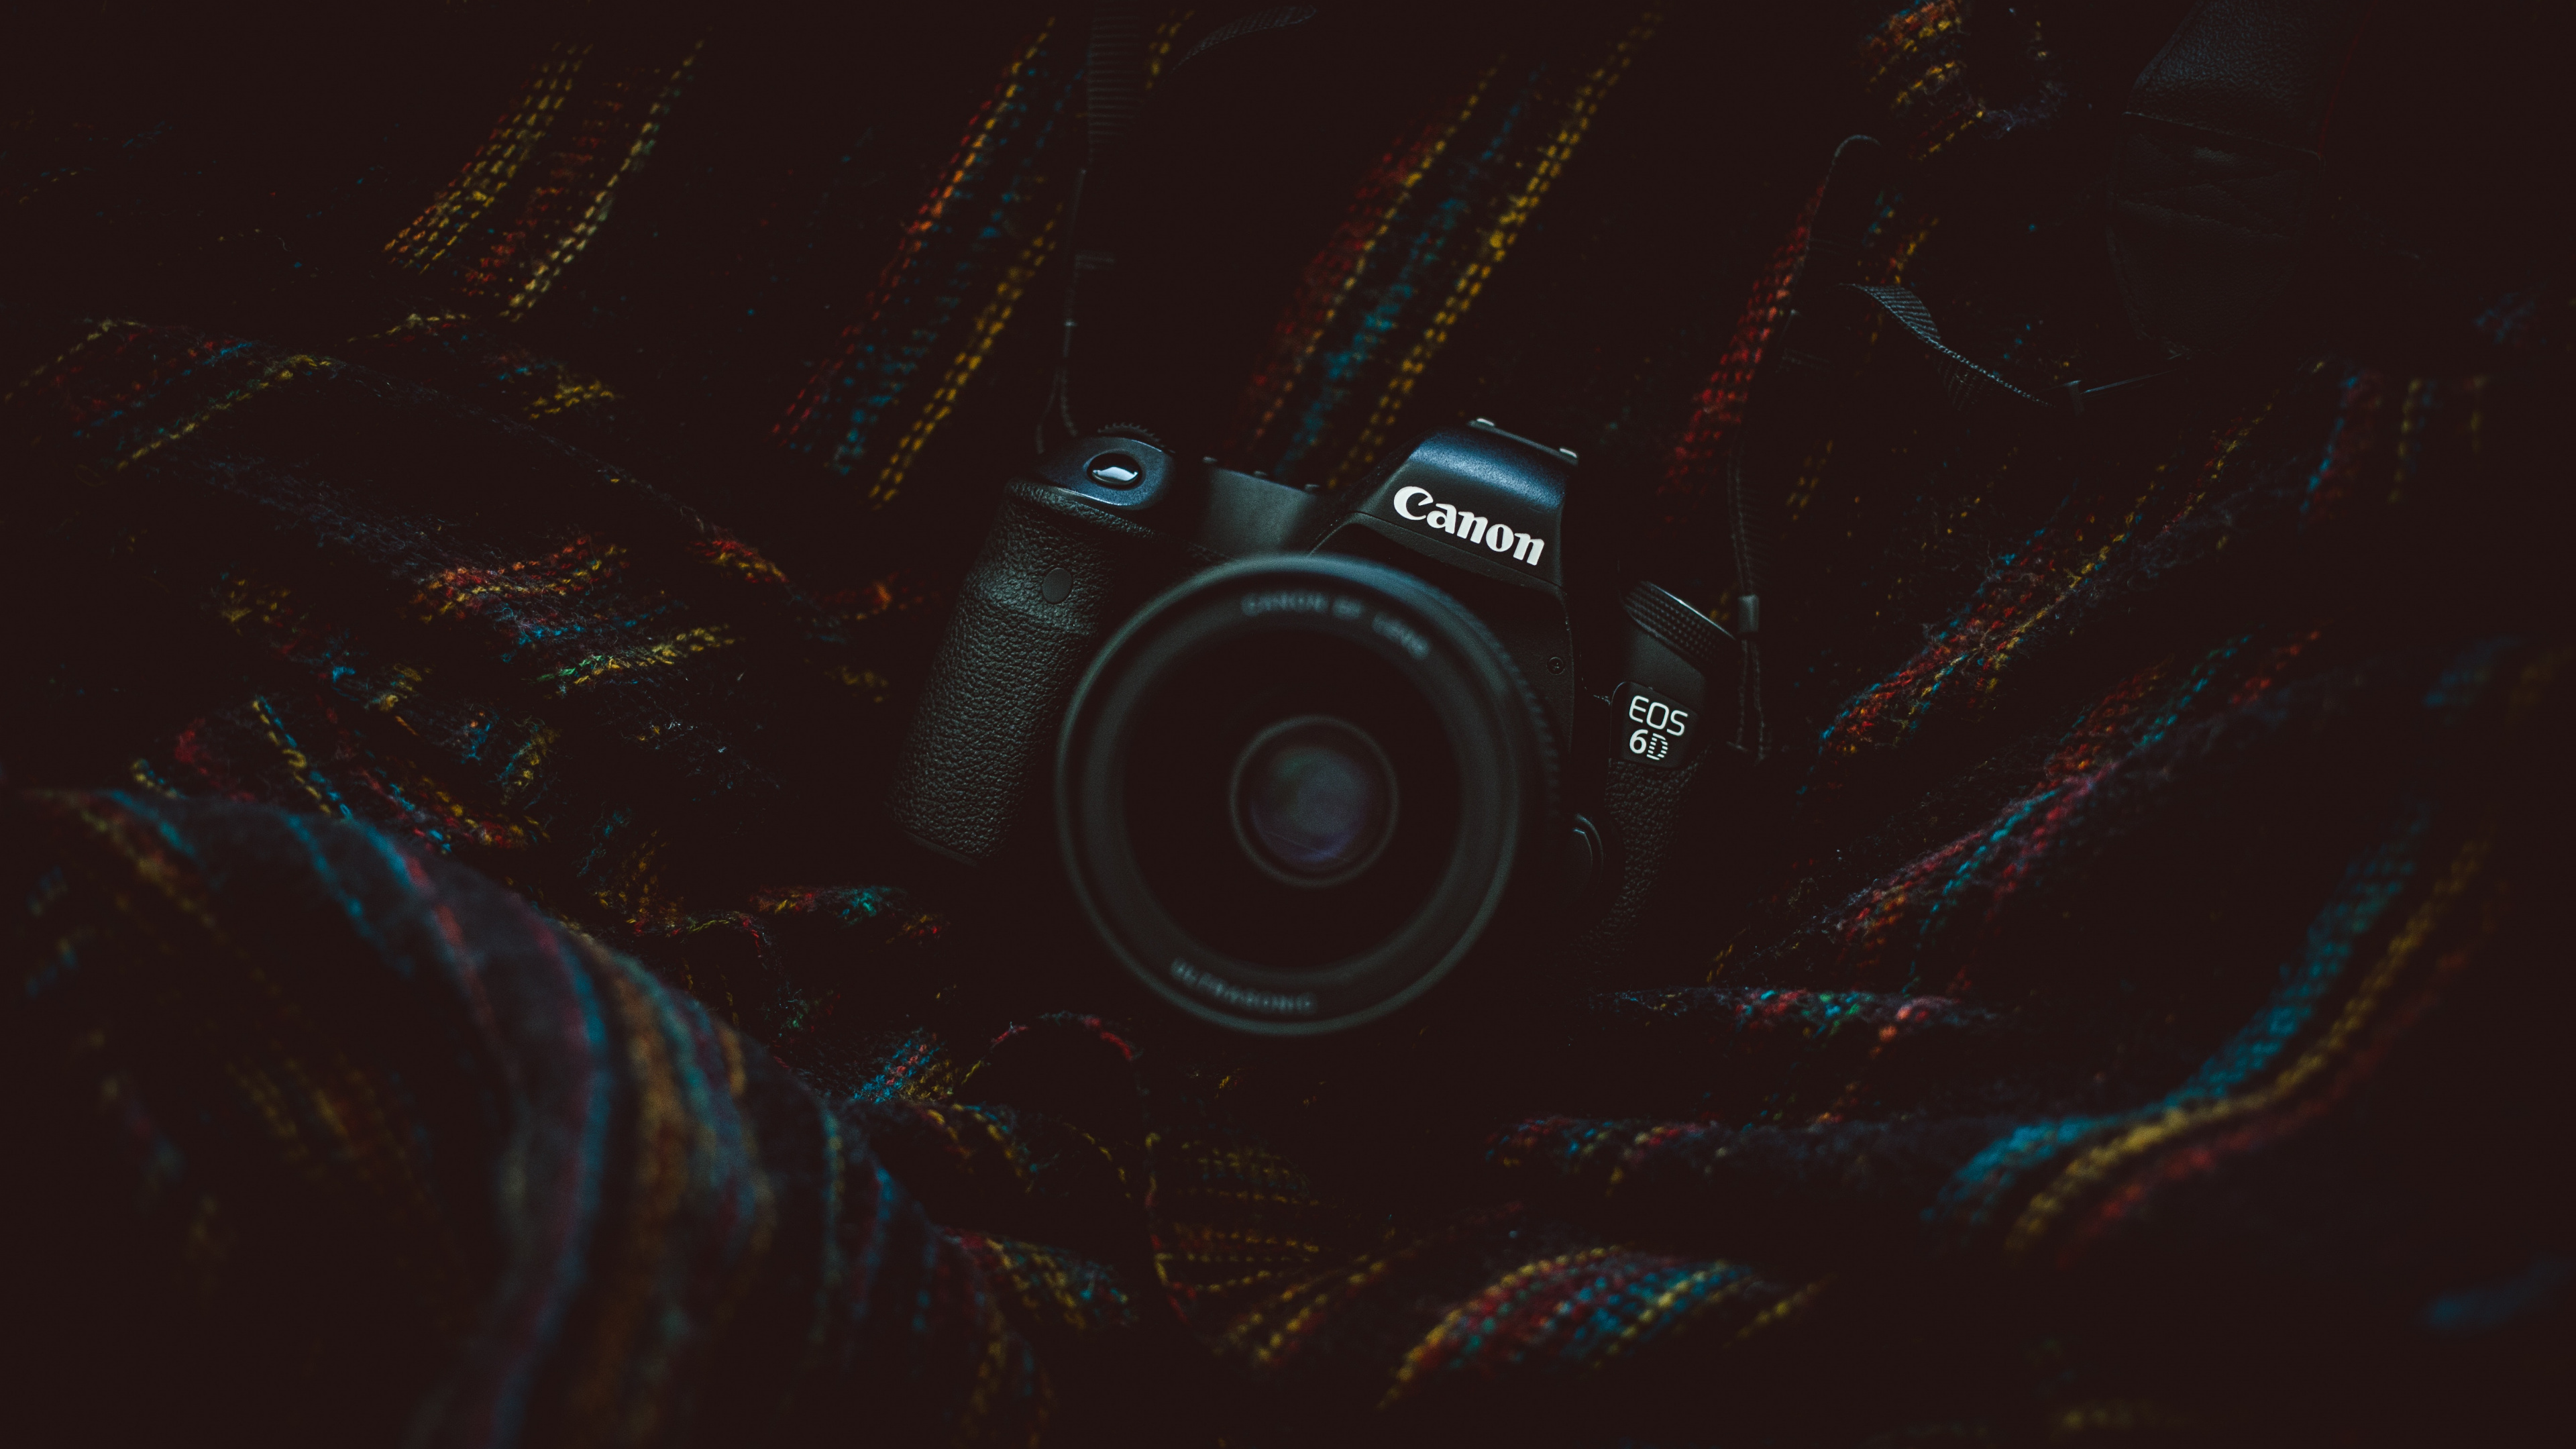 Black Nikon Dslr Camera on Black and Brown Textile. Wallpaper in 3840x2160 Resolution